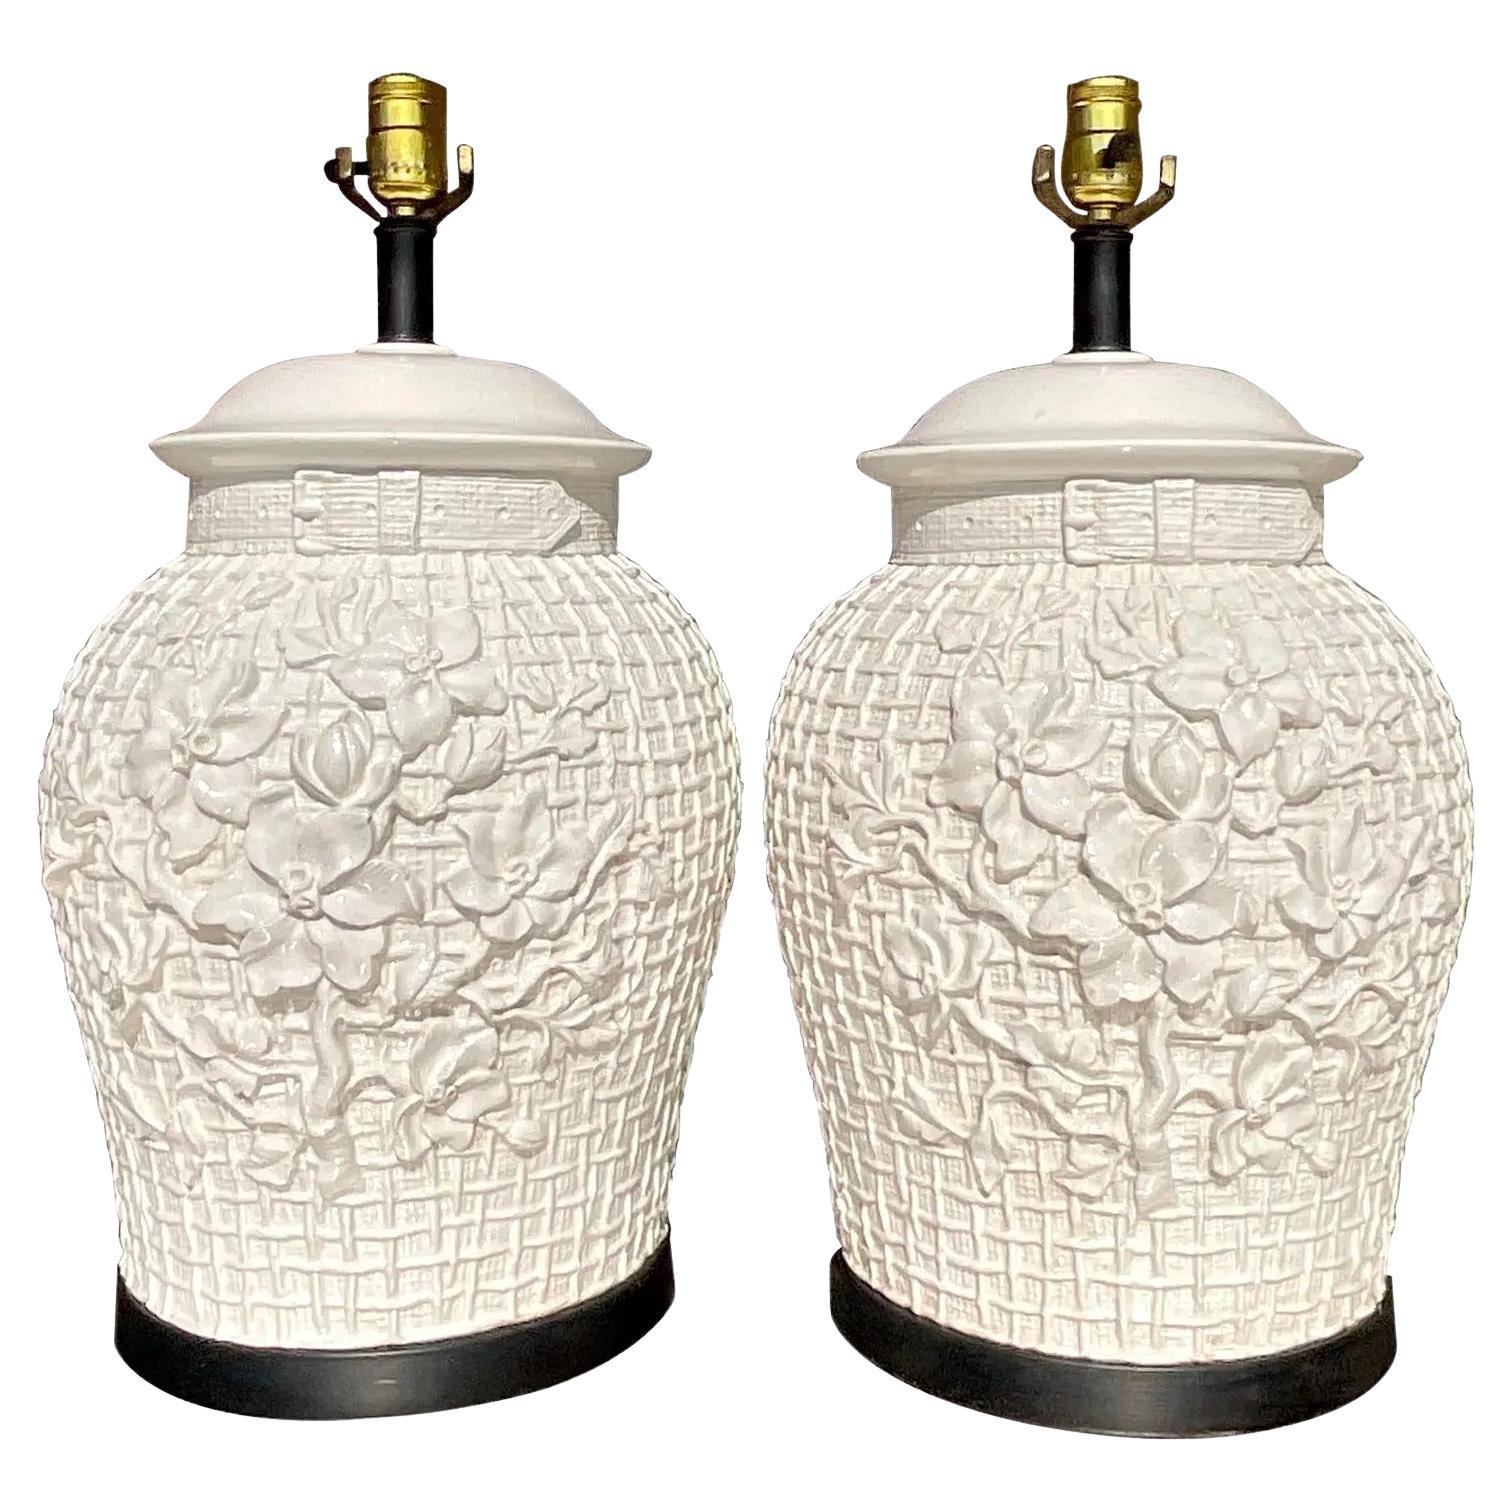 Vintage Regency glasierte Keramik Blumen Spalier Lampen - ein Paar